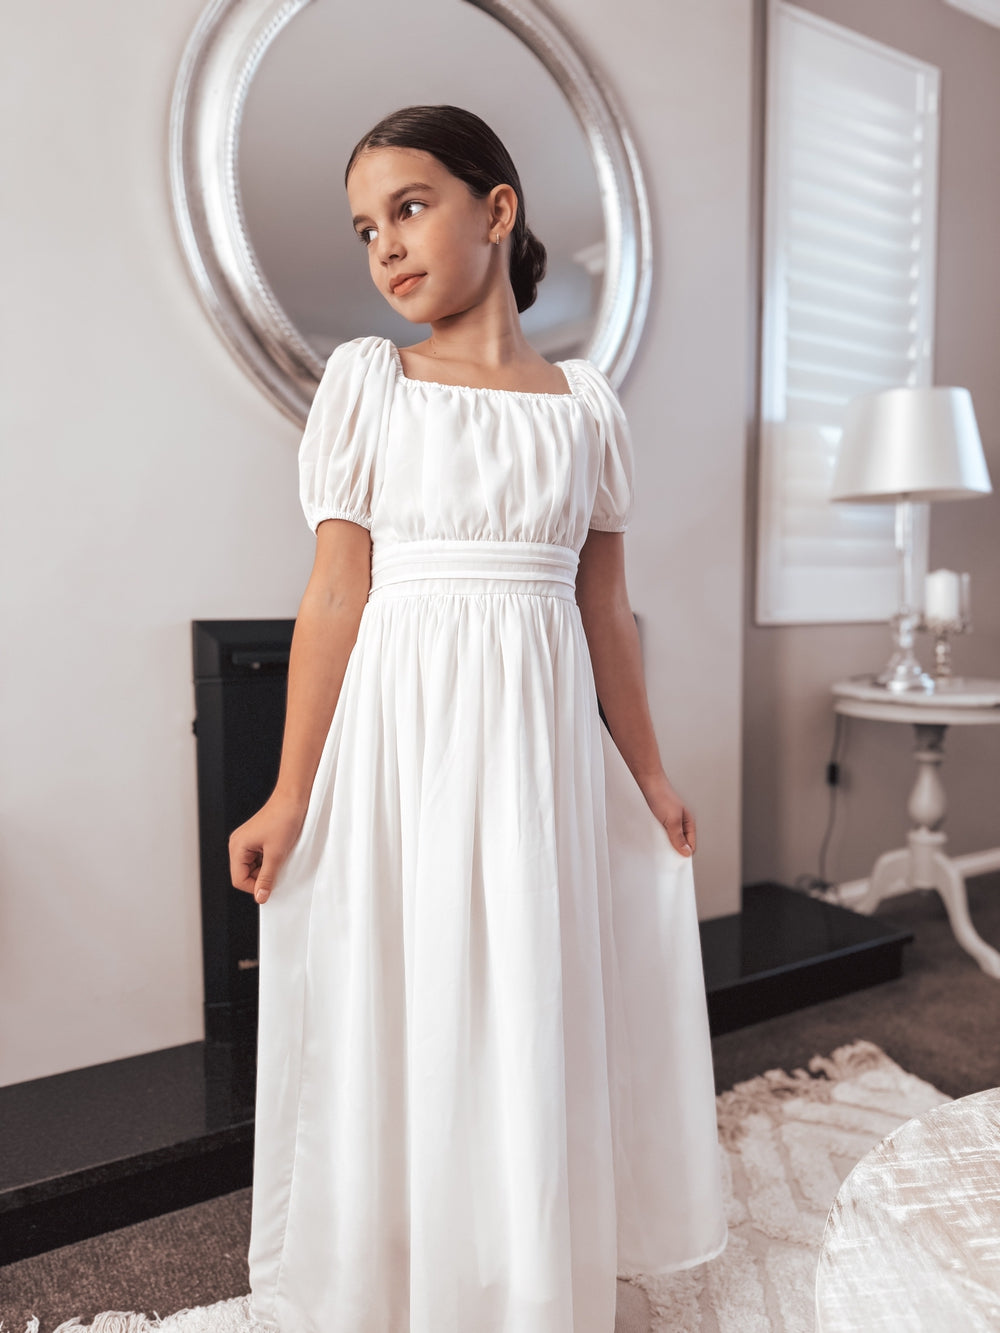 Emilia Girls White Dress - Tween Girls Dresses